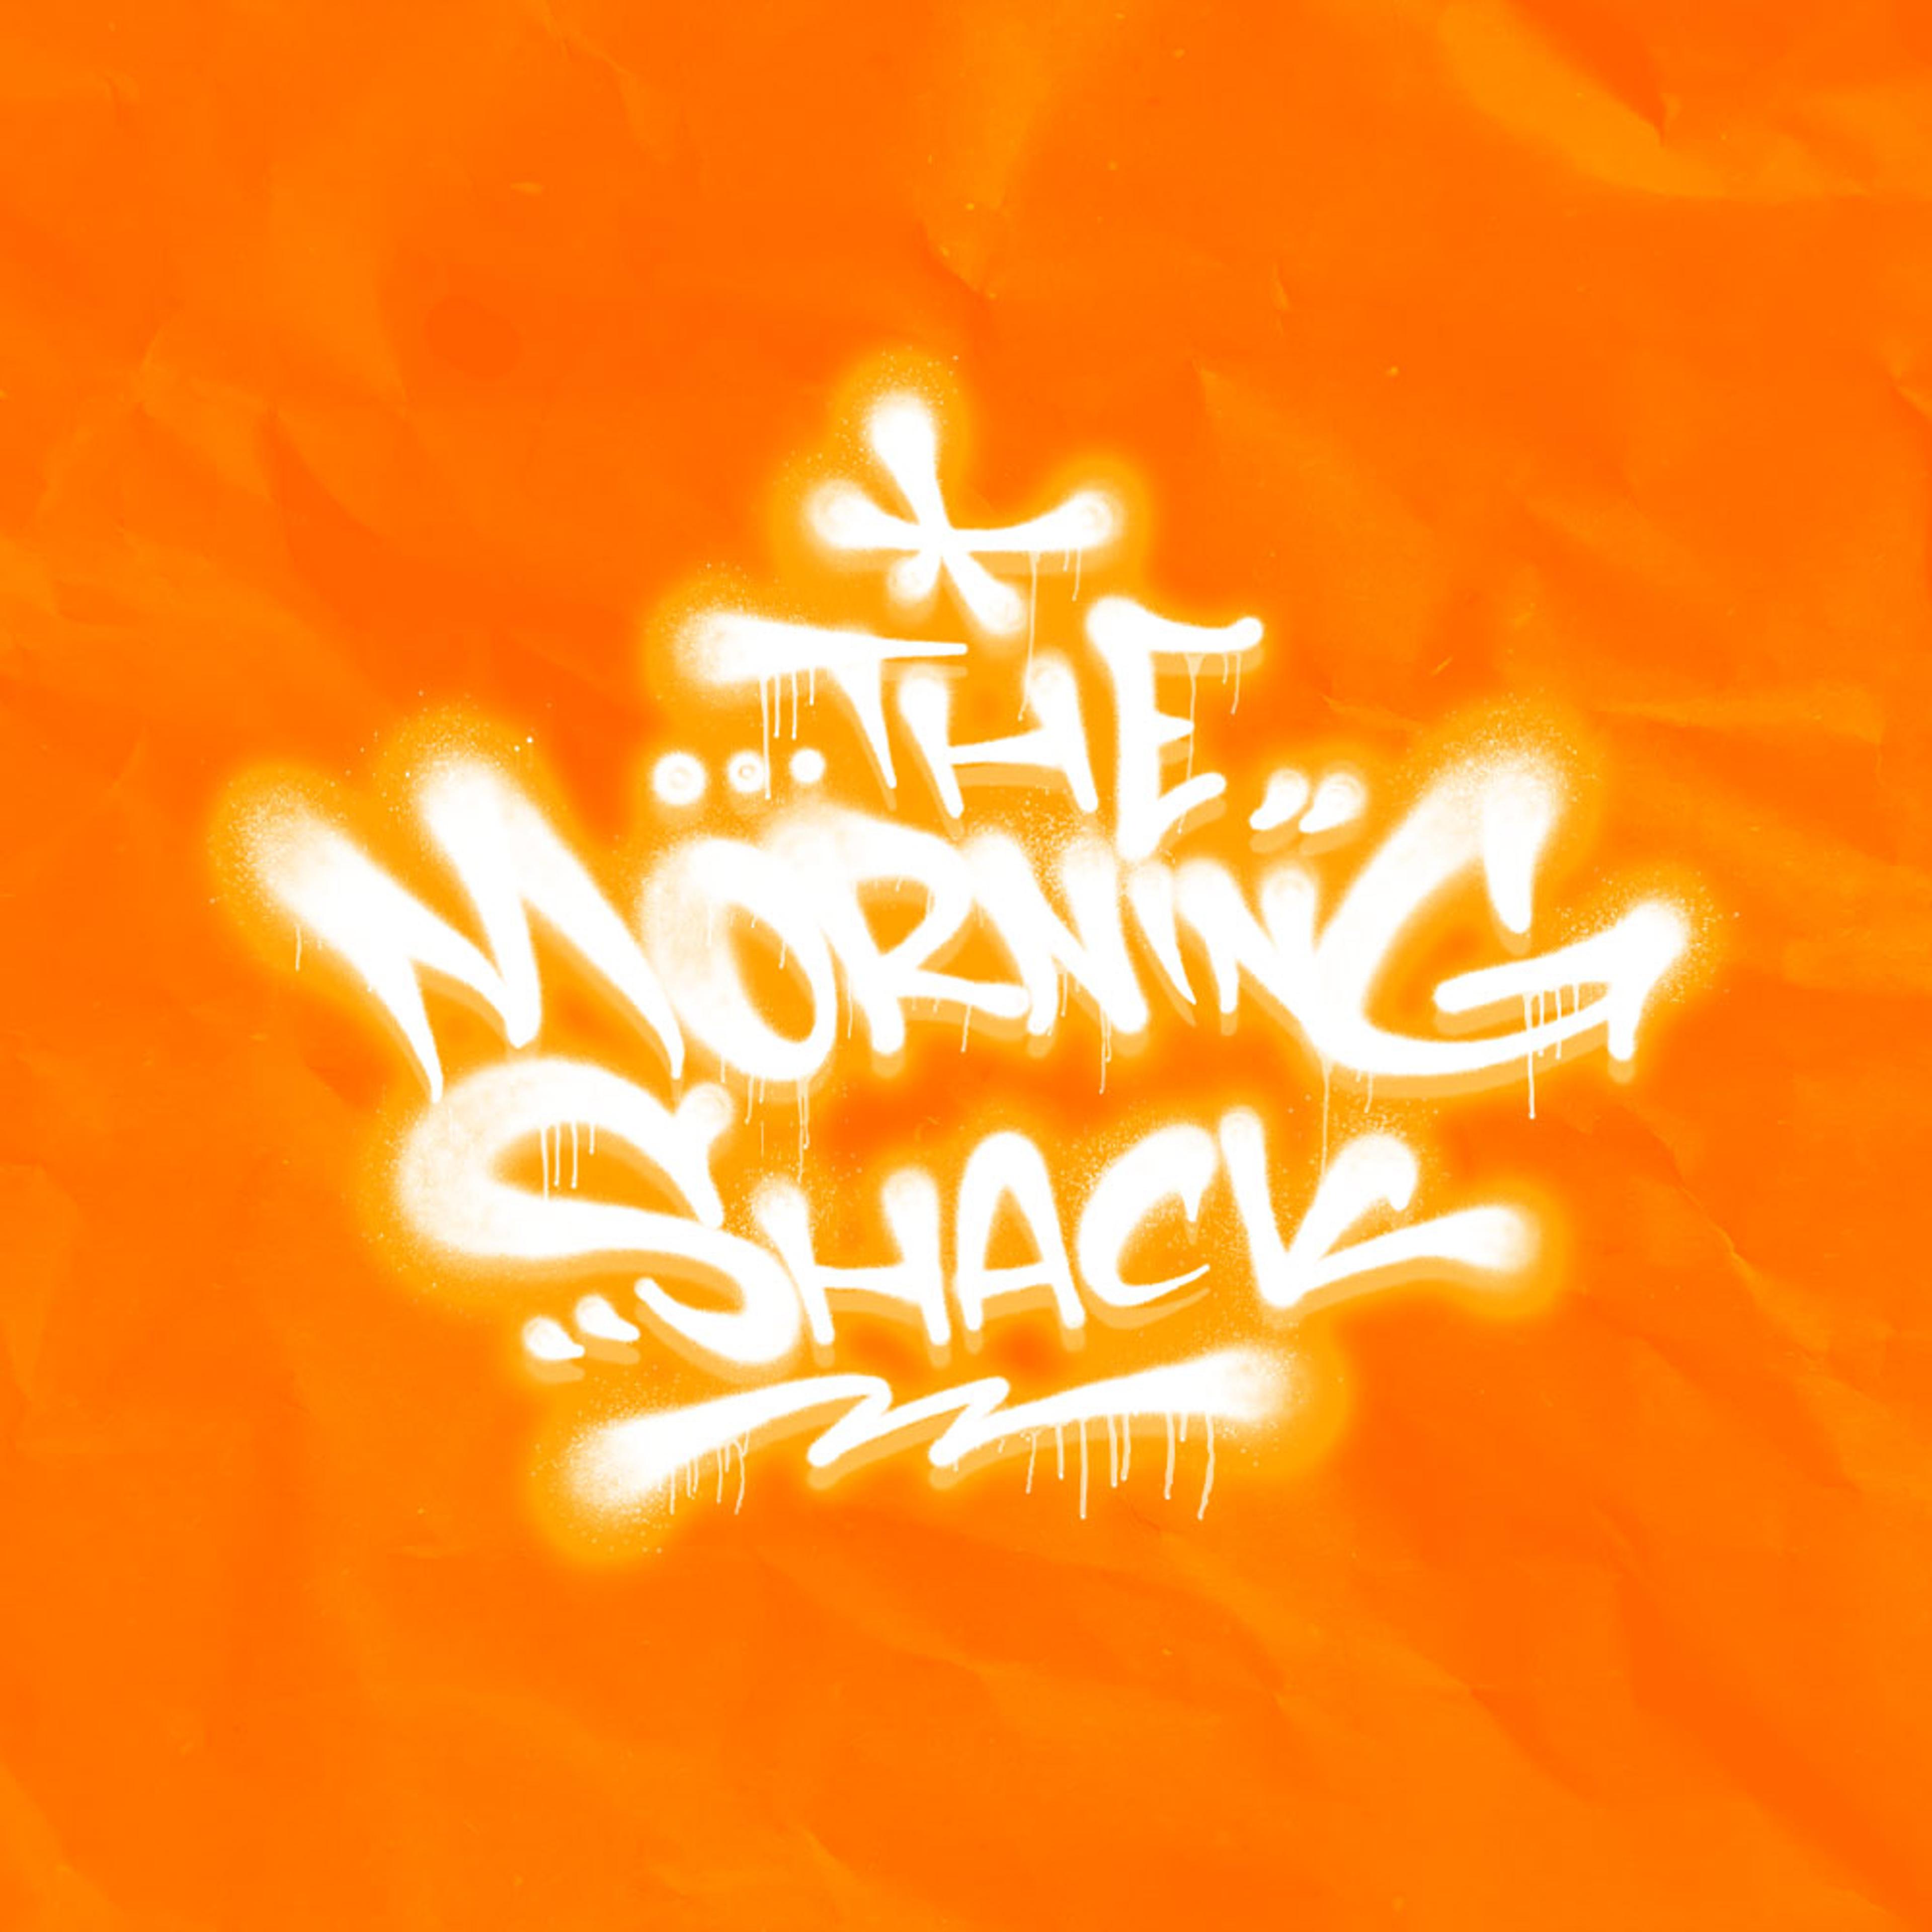 The Morning Shack Runback